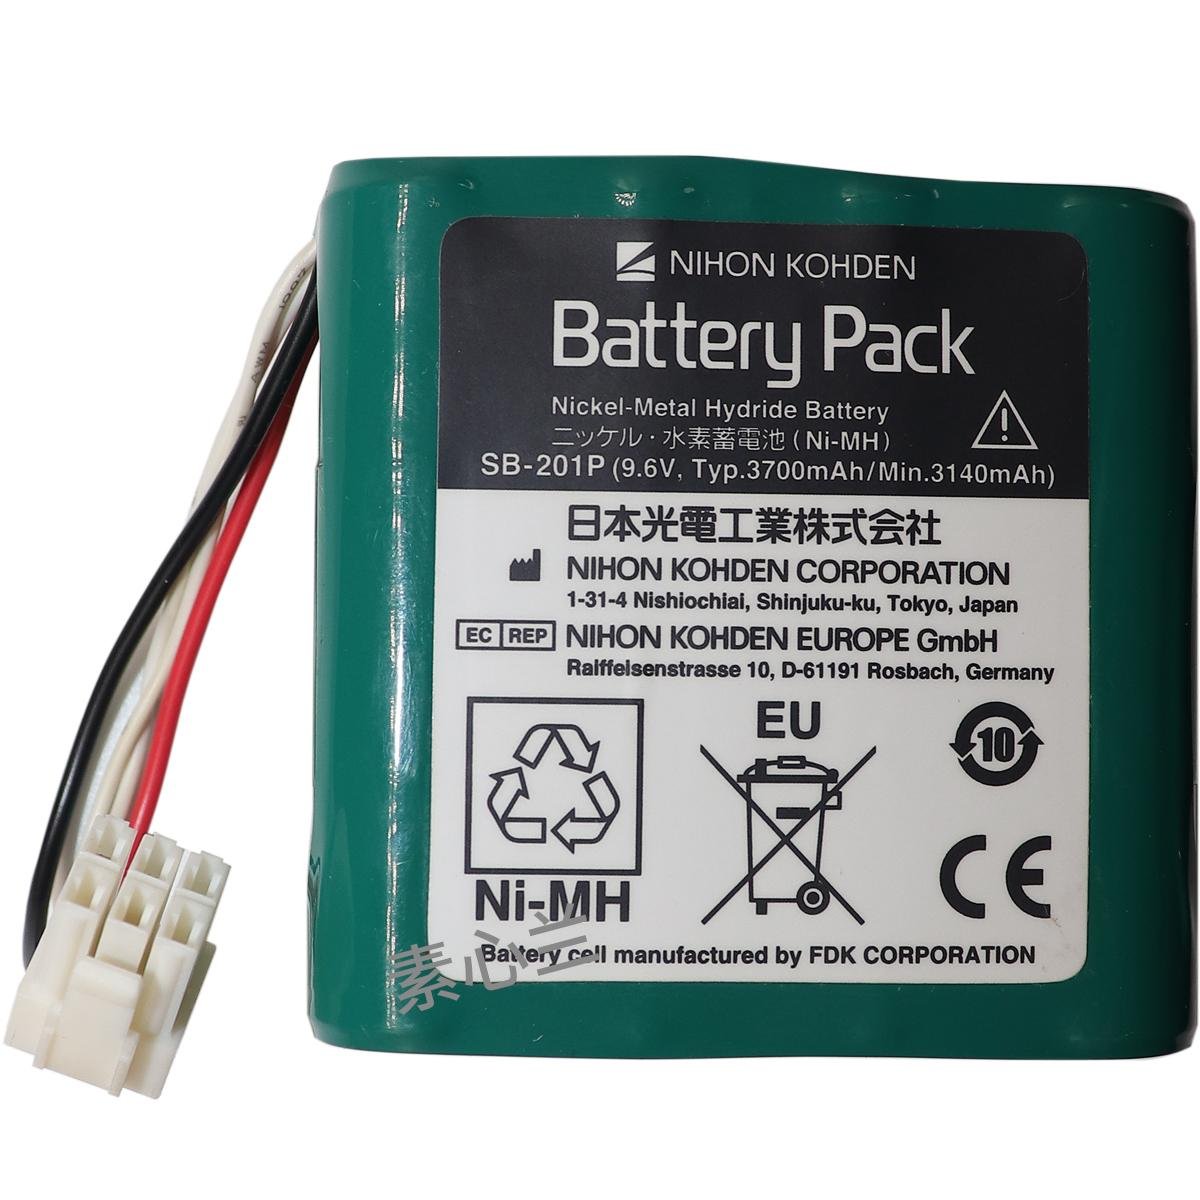 Original defibrillator battery for nihon kohden SP-201P